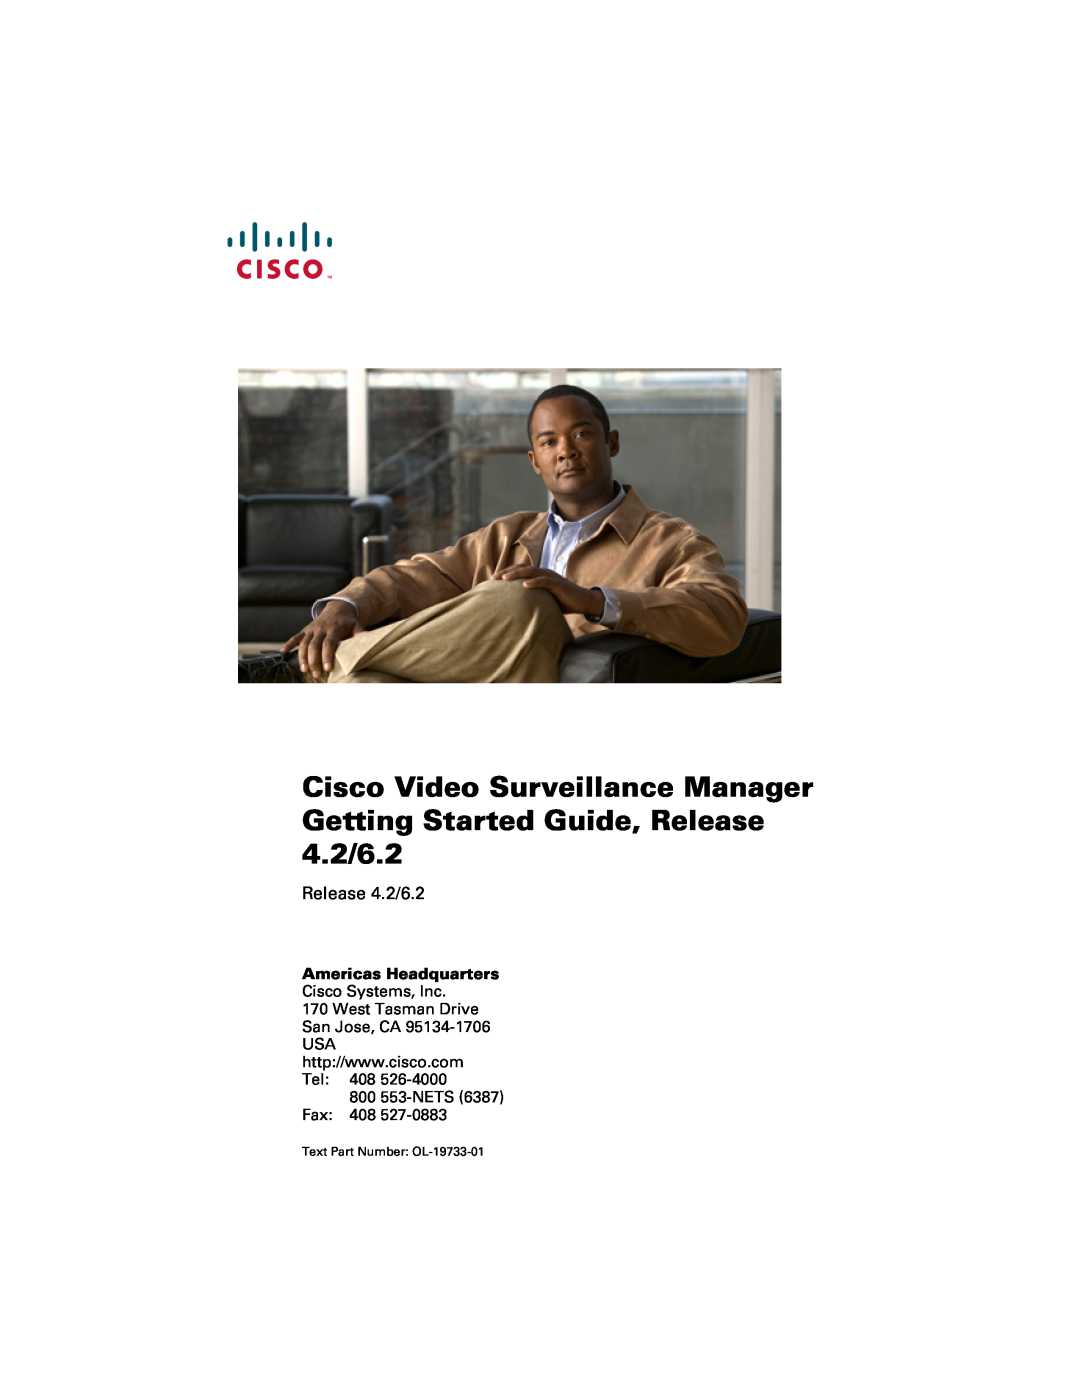 Cisco Systems manual Release 4.2/6.2, Americas Headquarters, Cisco Systems, Inc 170 West Tasman Drive San Jose, CA 